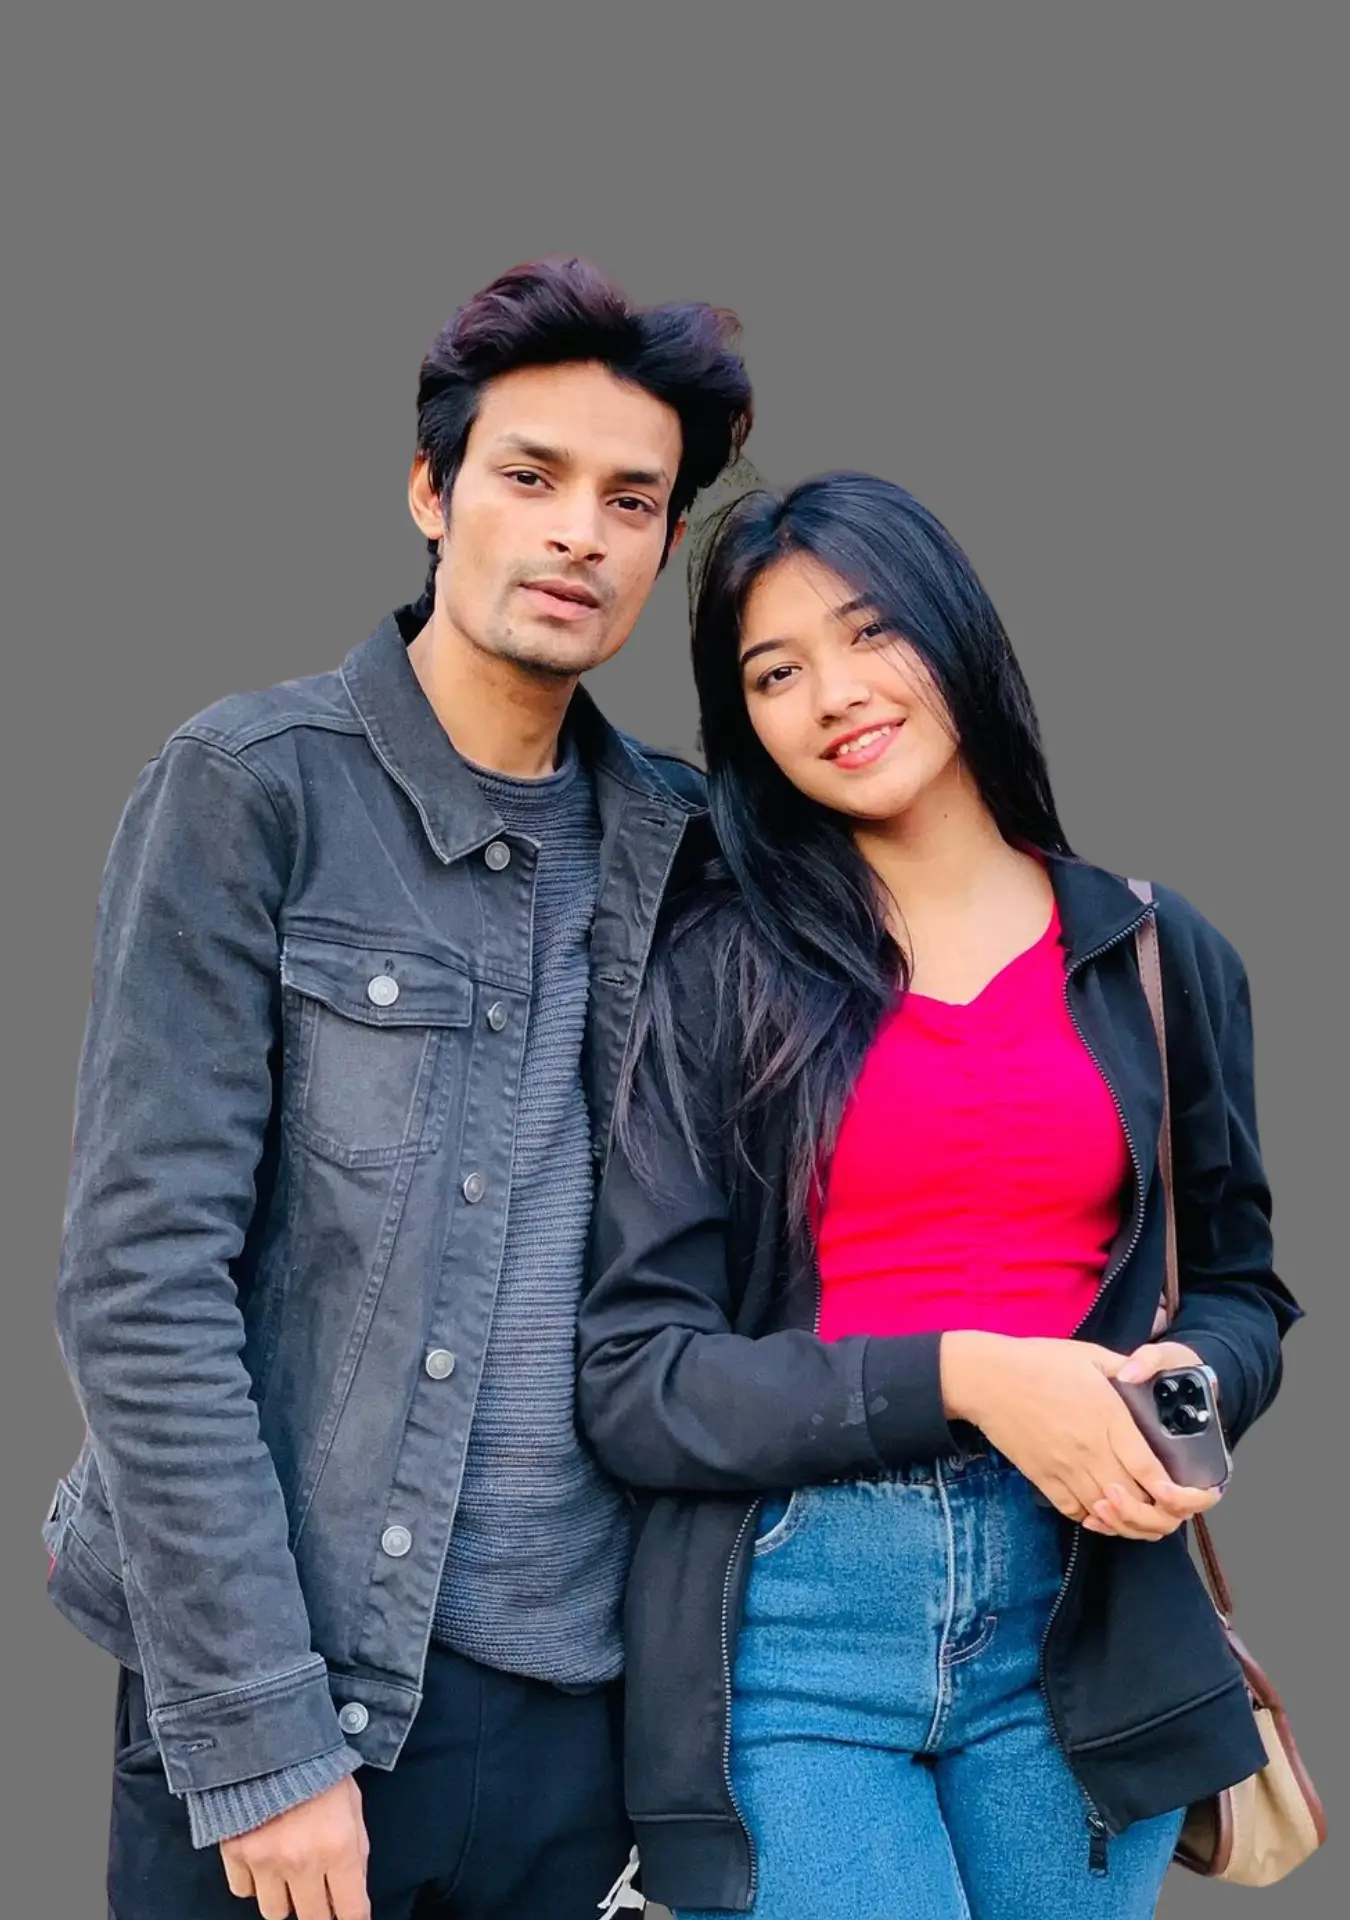 Shanti Rehman and her boyfriend Nahid Khan